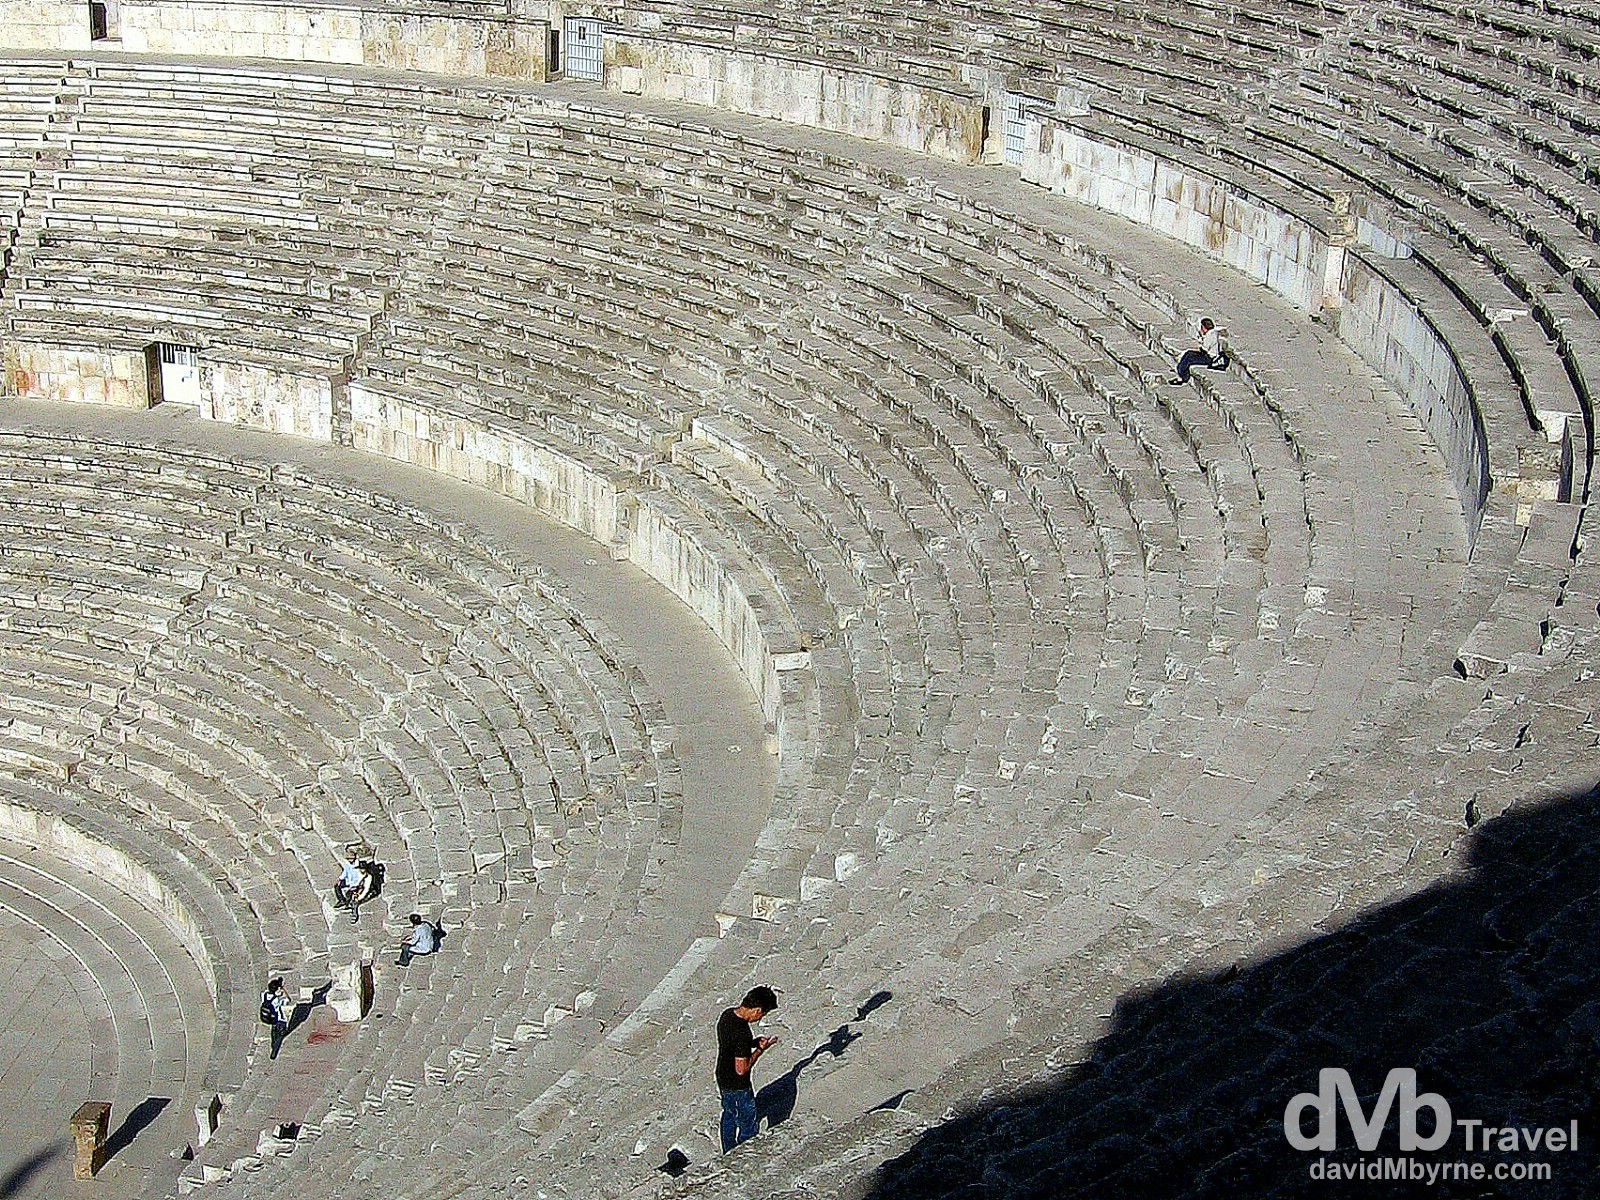 Steps of the Roman Amphitheater in Amman, Jordan. April 28, 2008.